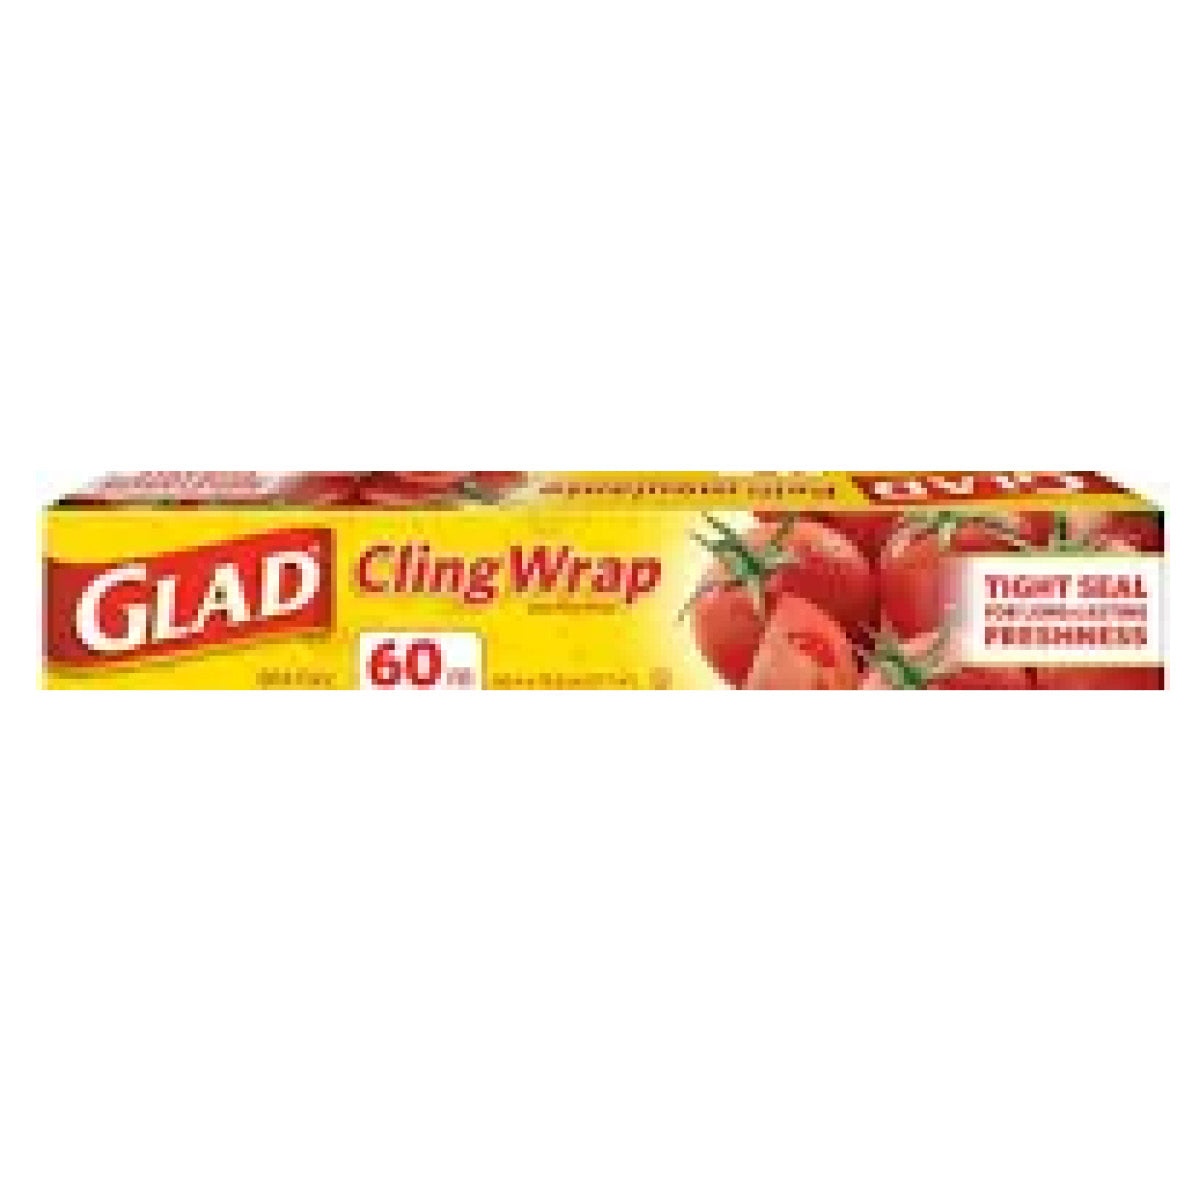 Glad Cling Wrap (Saran Wrap), 60m